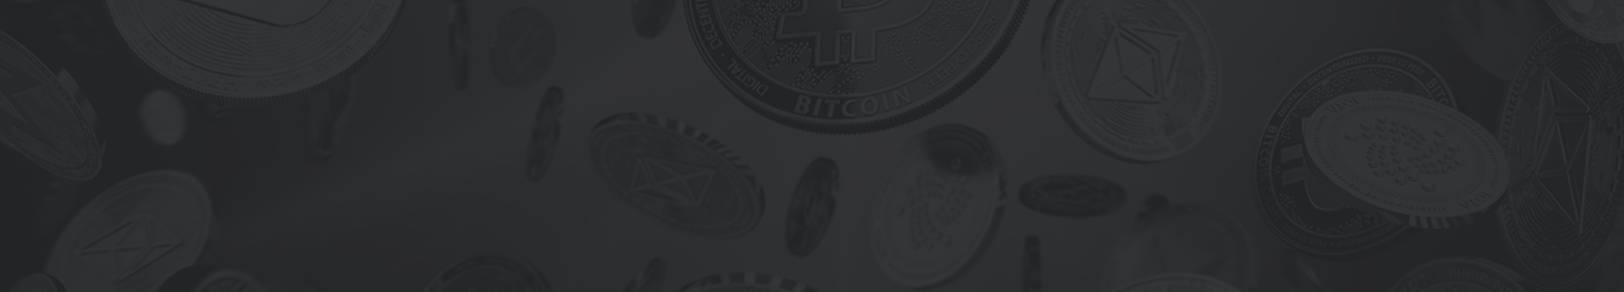 Bitcoin Machine - Ešte ste sa nepripojili k Bitcoin Machine?